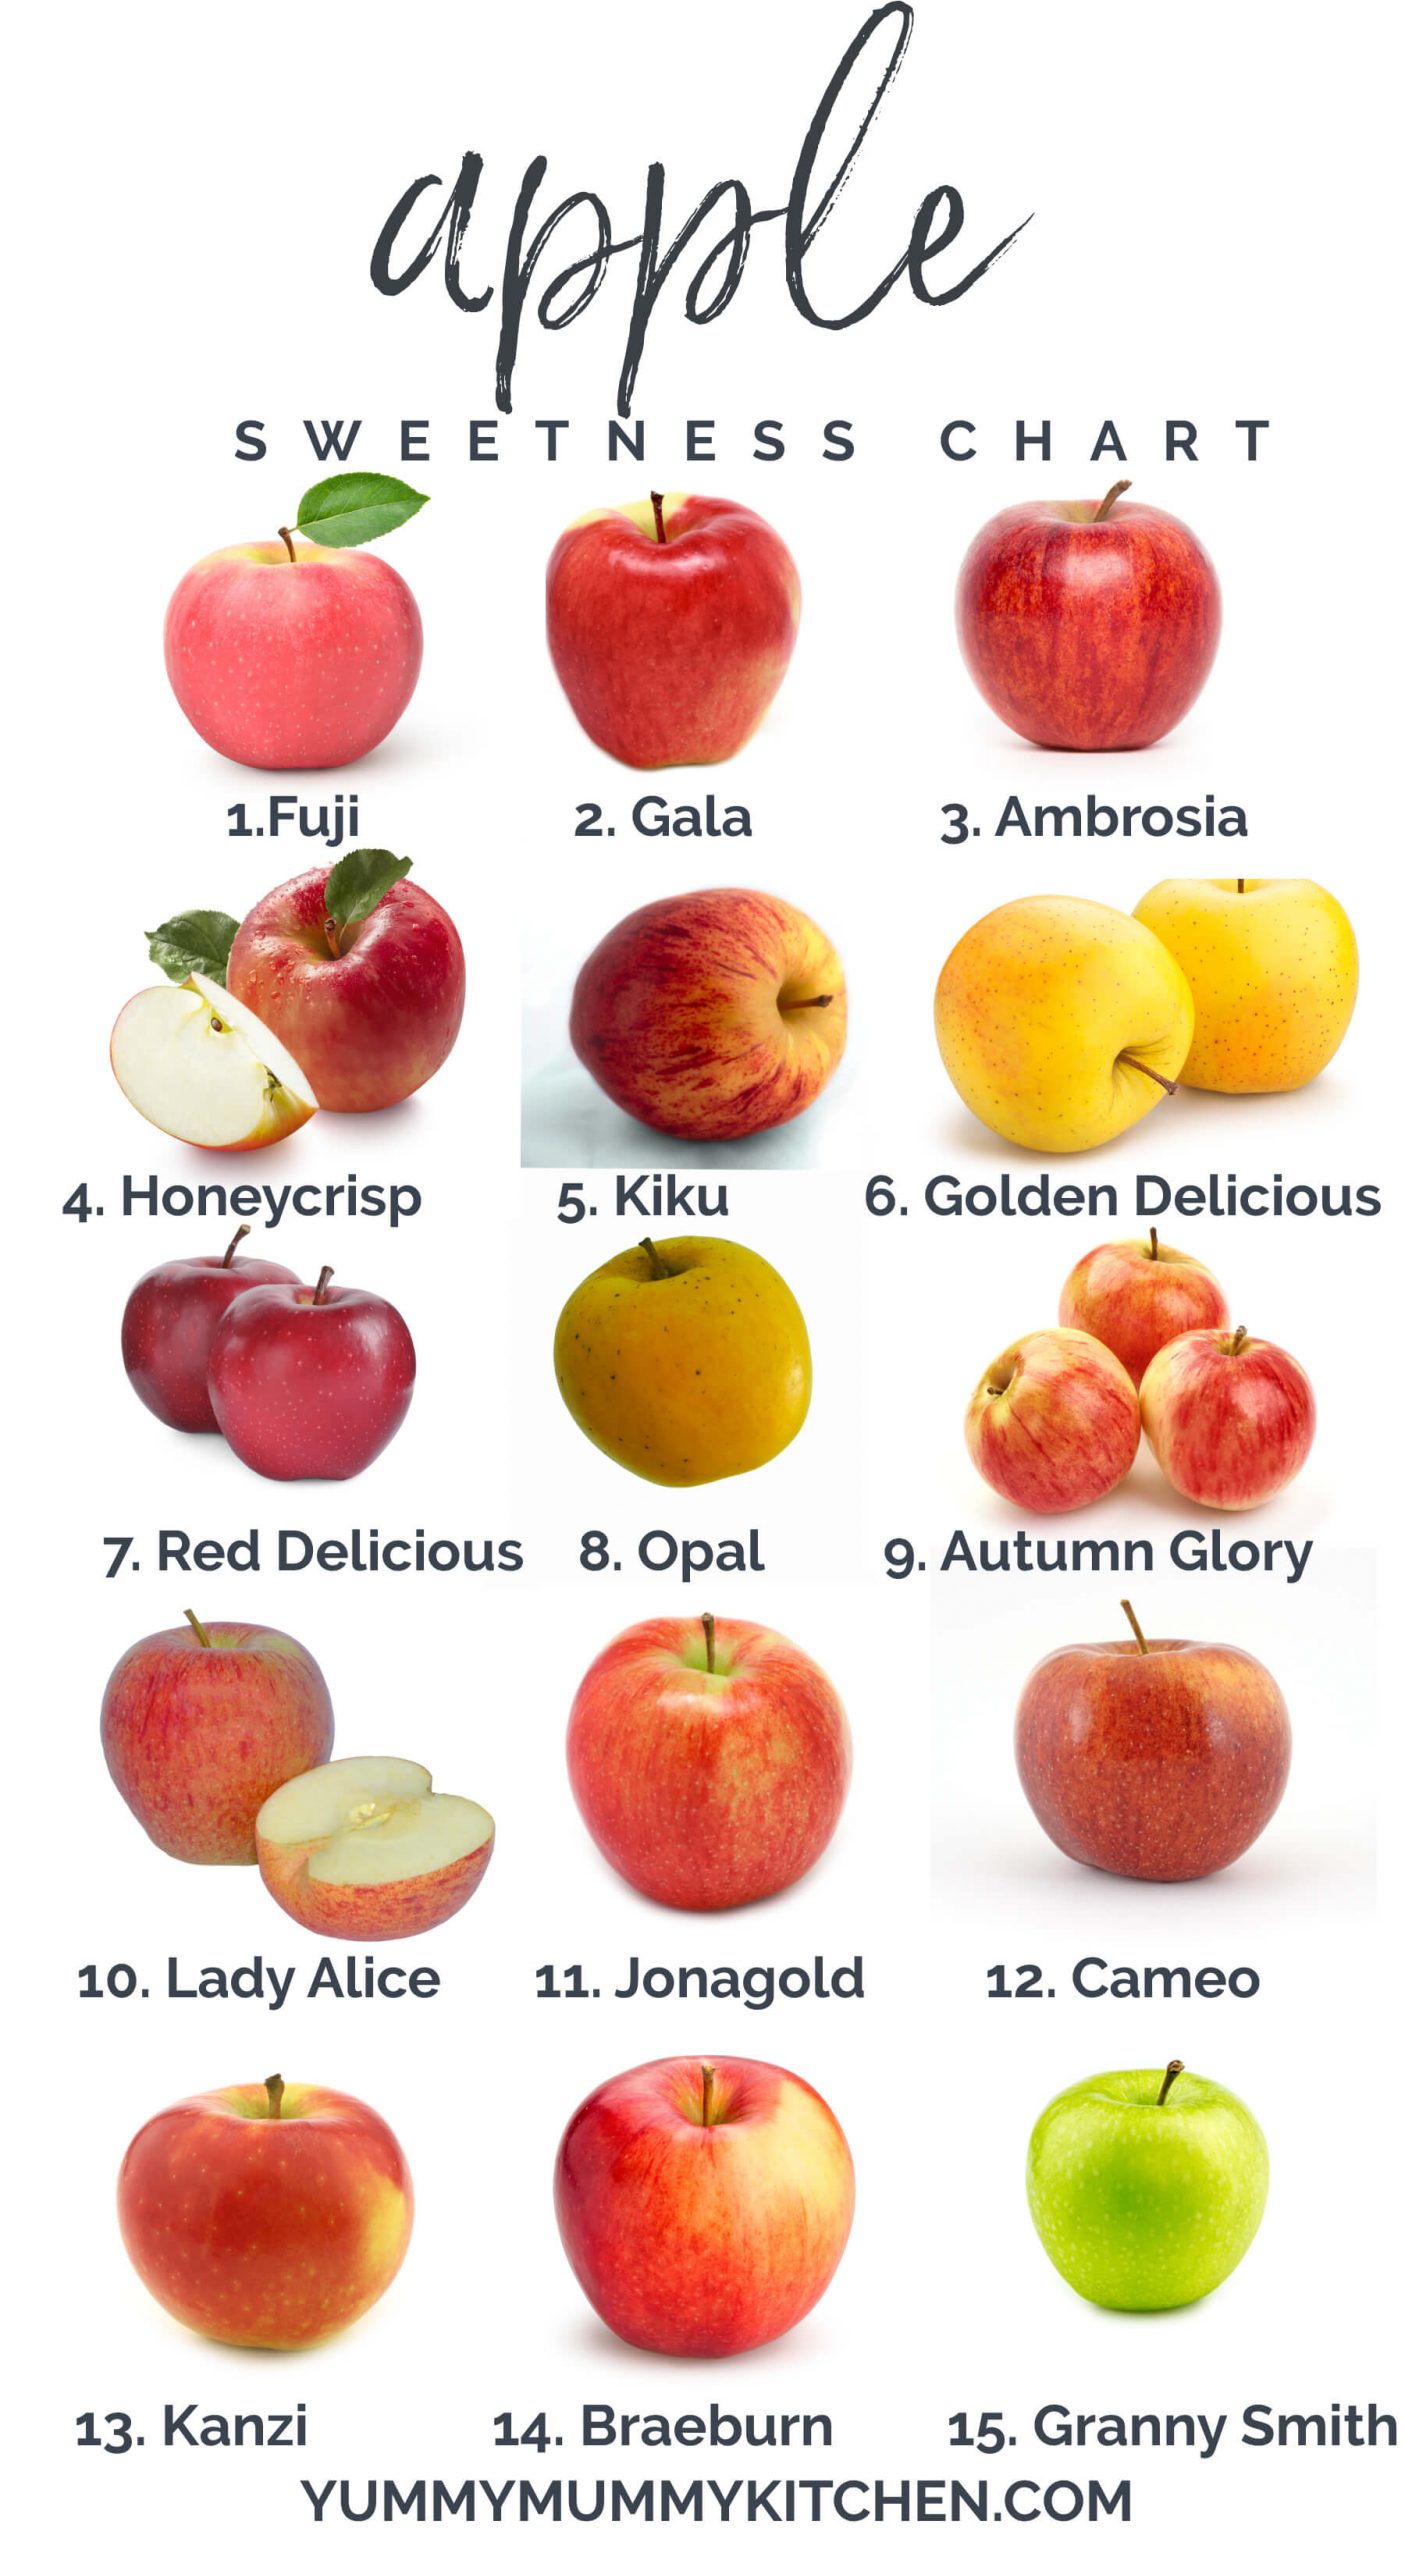 https://www.yummymummykitchen.com/wp-content/uploads/2021/09/apple-sweetness-chart-1-scaled.jpg